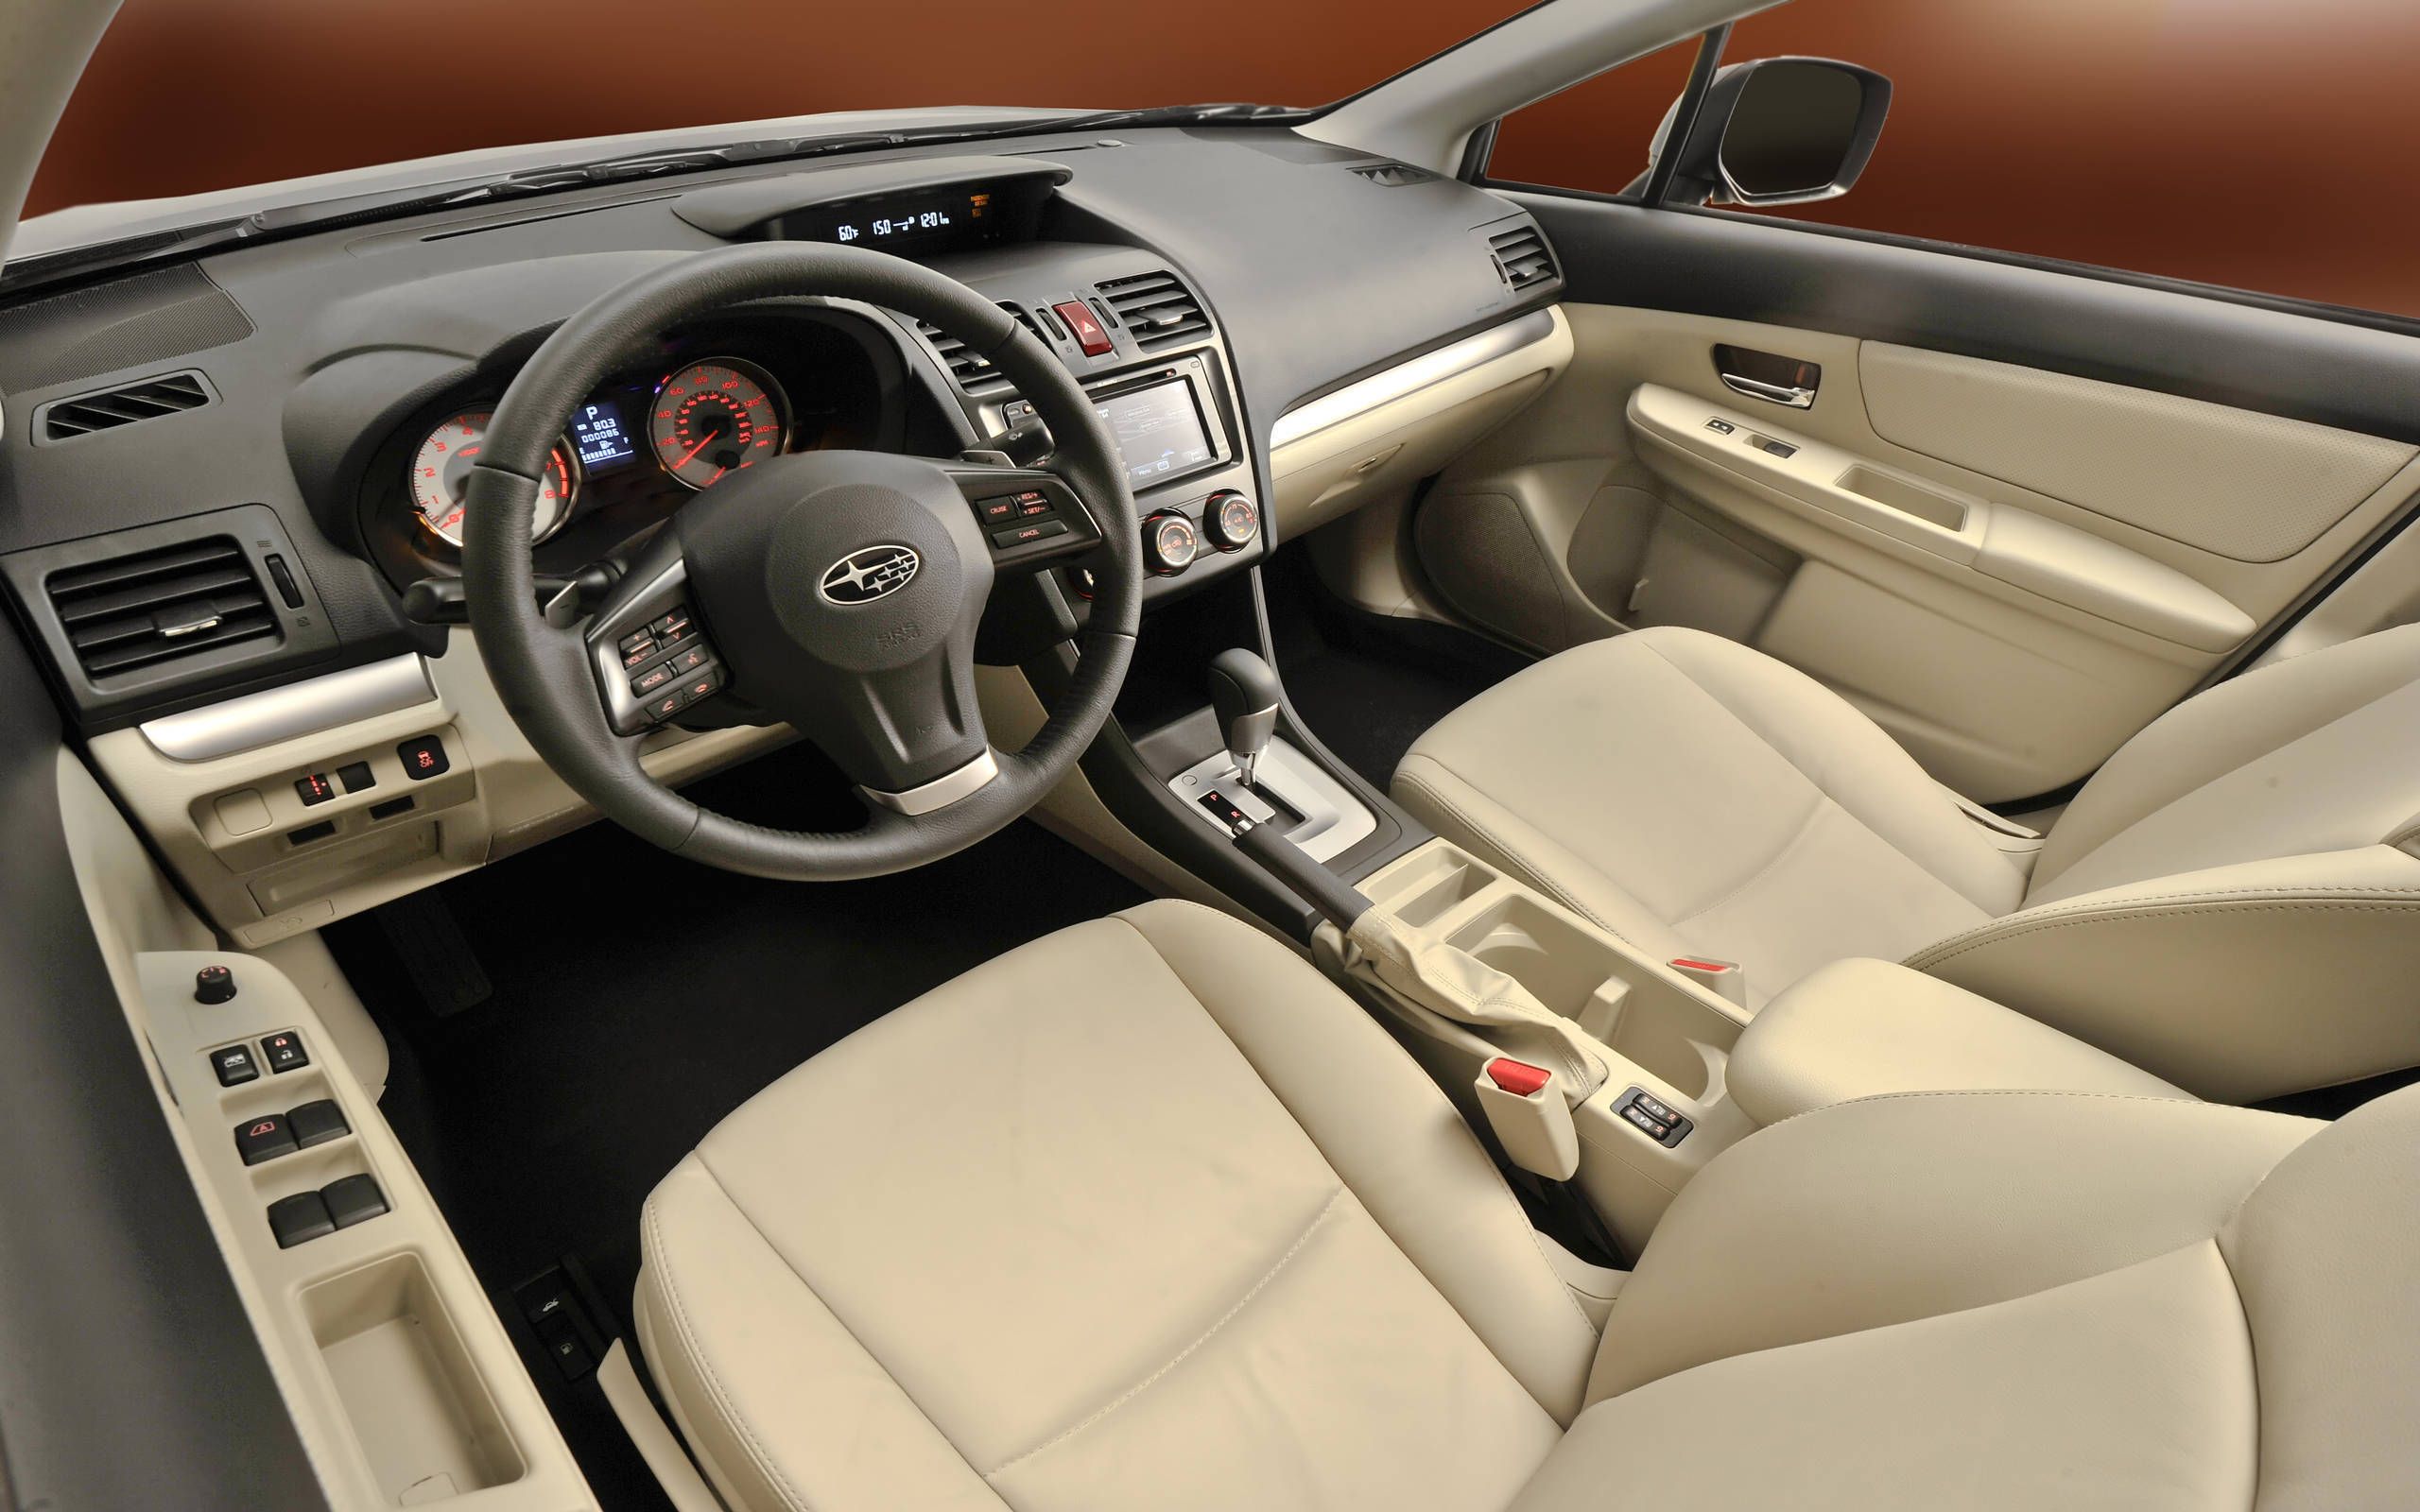 2014 Subaru Impreza Sport Limited review notes